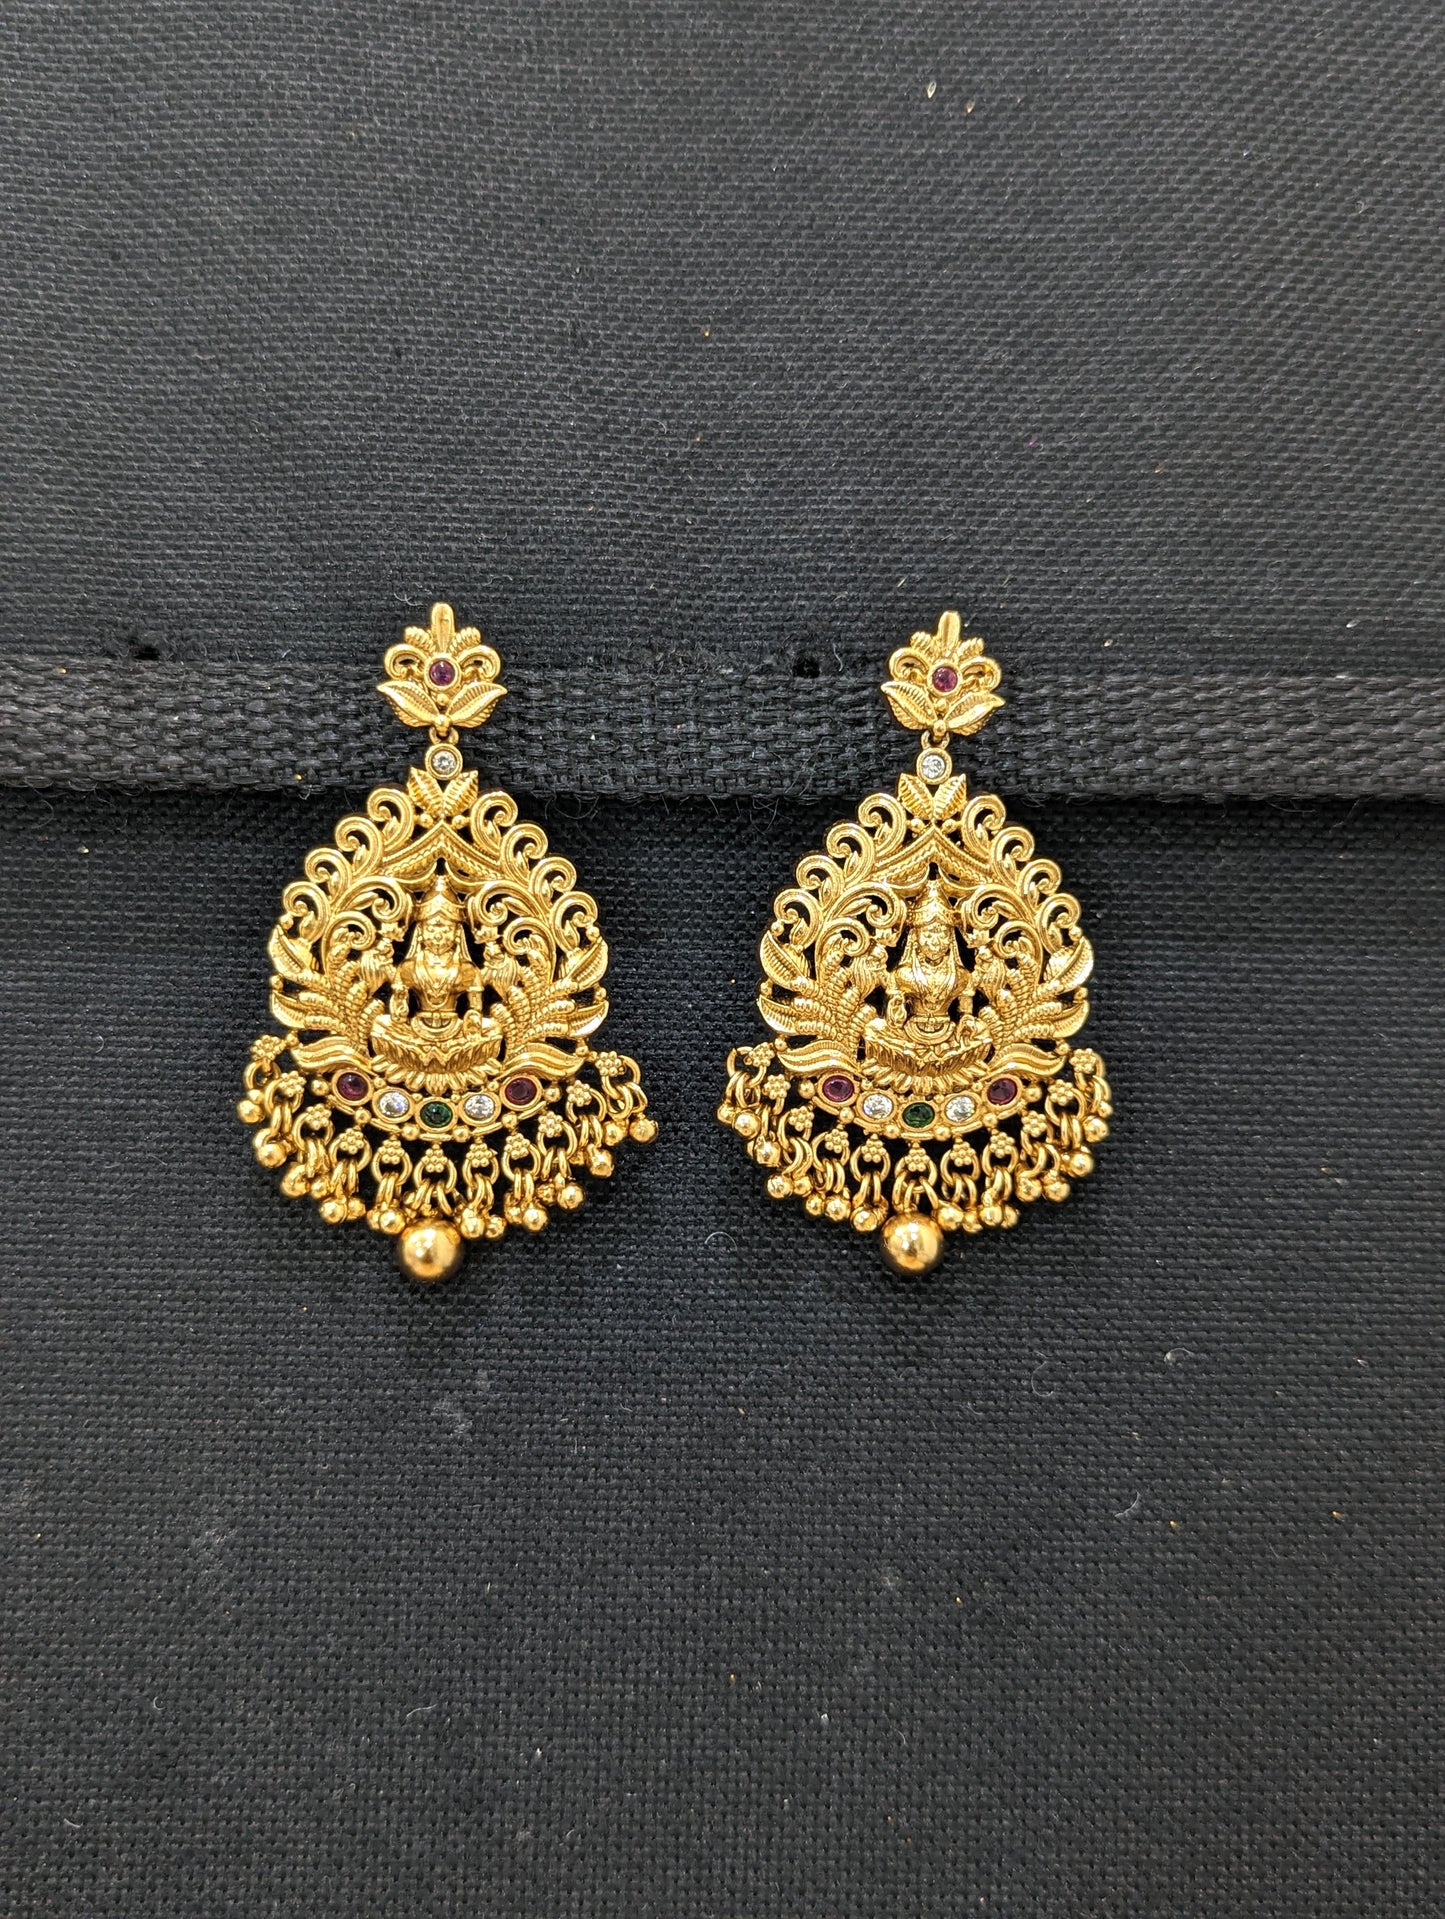 Antique Gold plated Kemp Chandbali Earrings